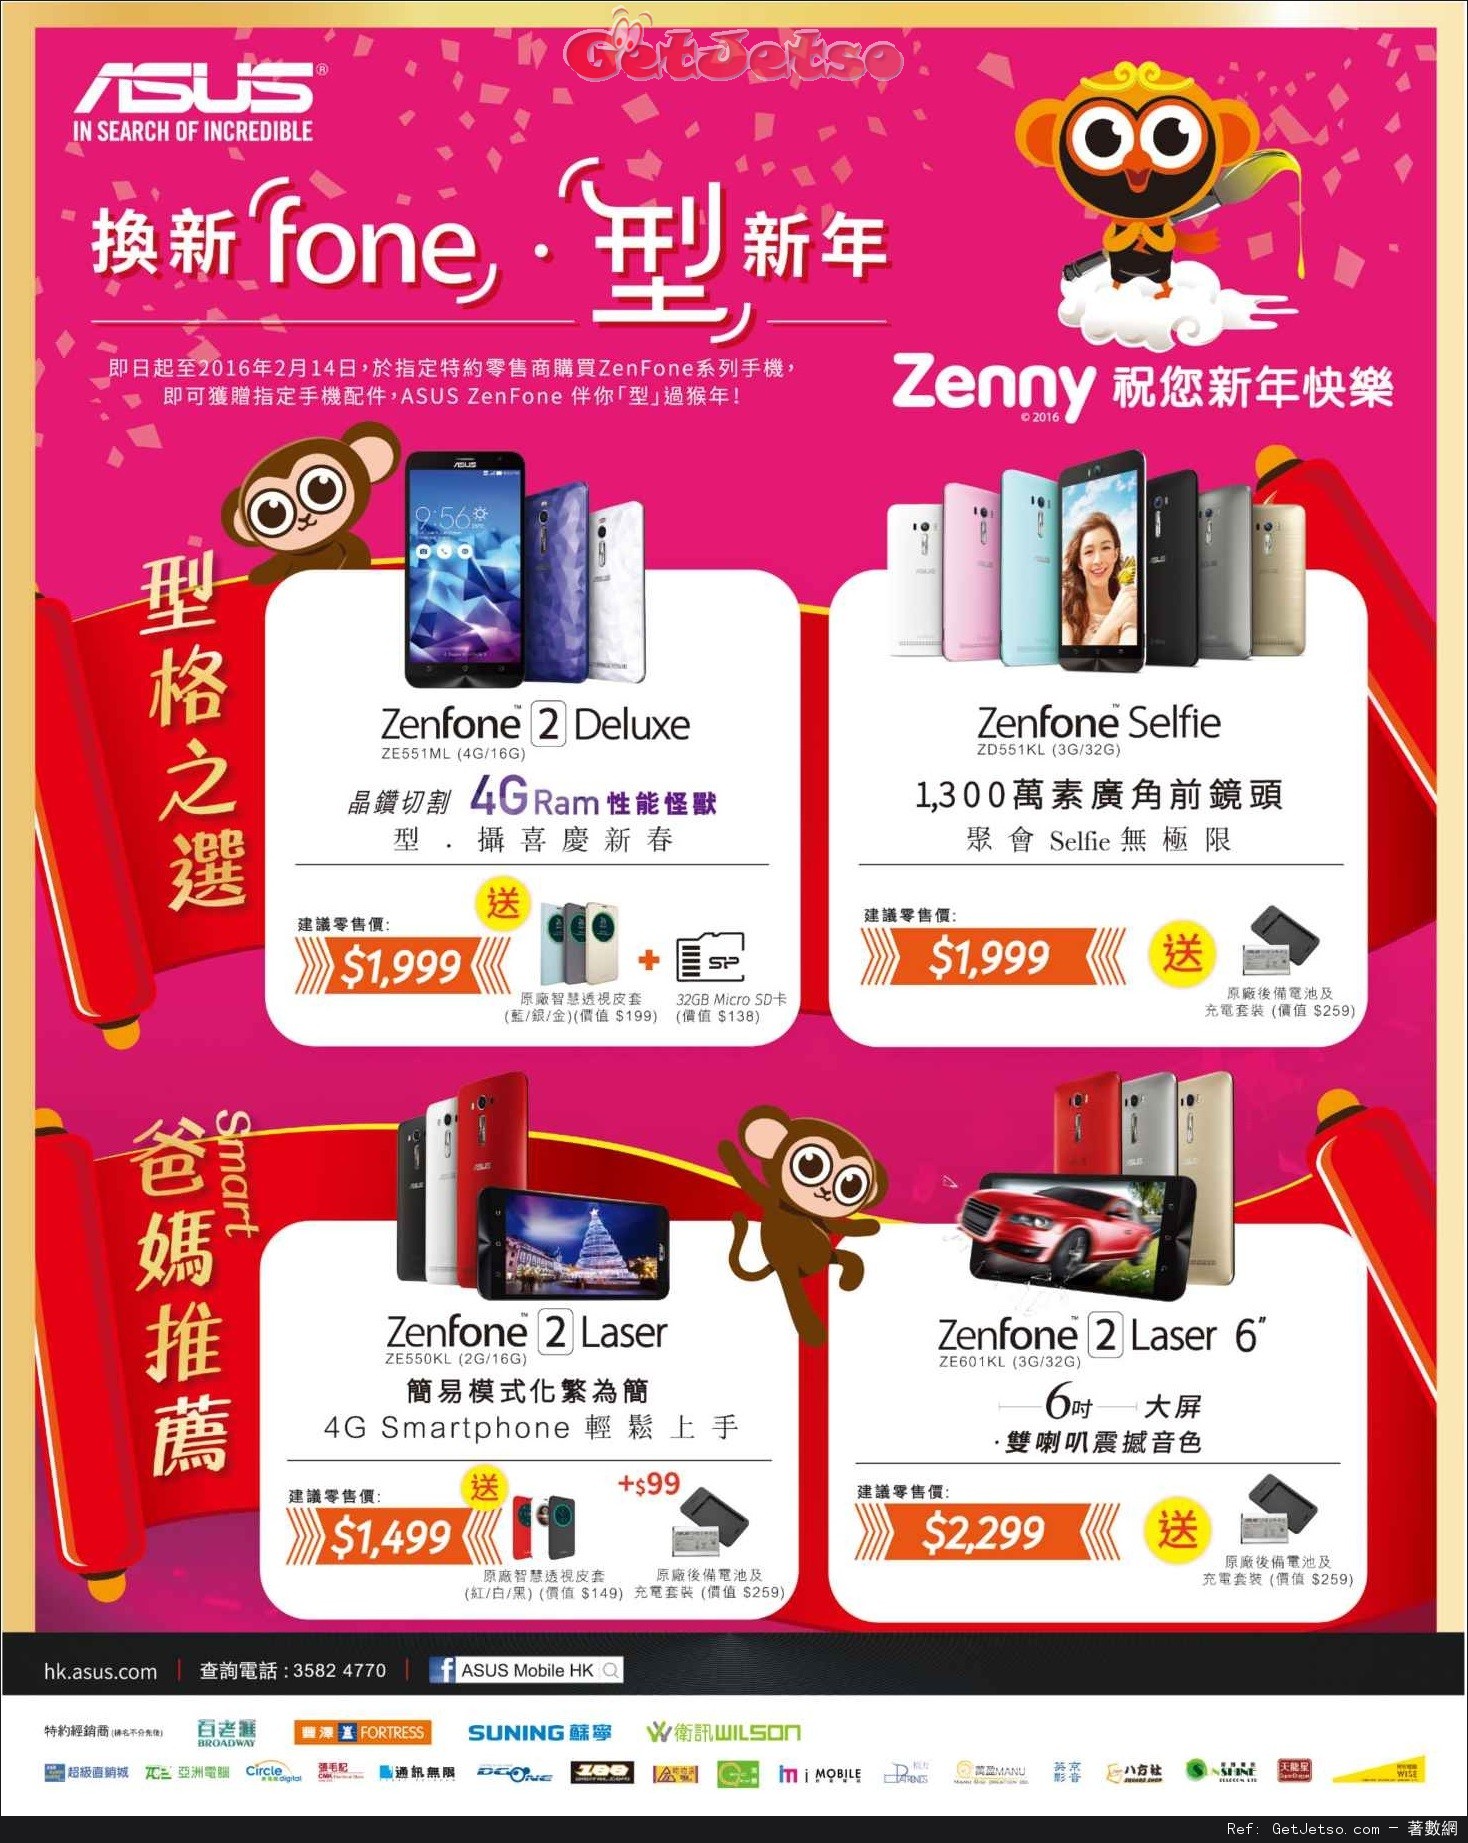 ASUS ZenFone 系列手機購買優惠(至16年2月14日)圖片1